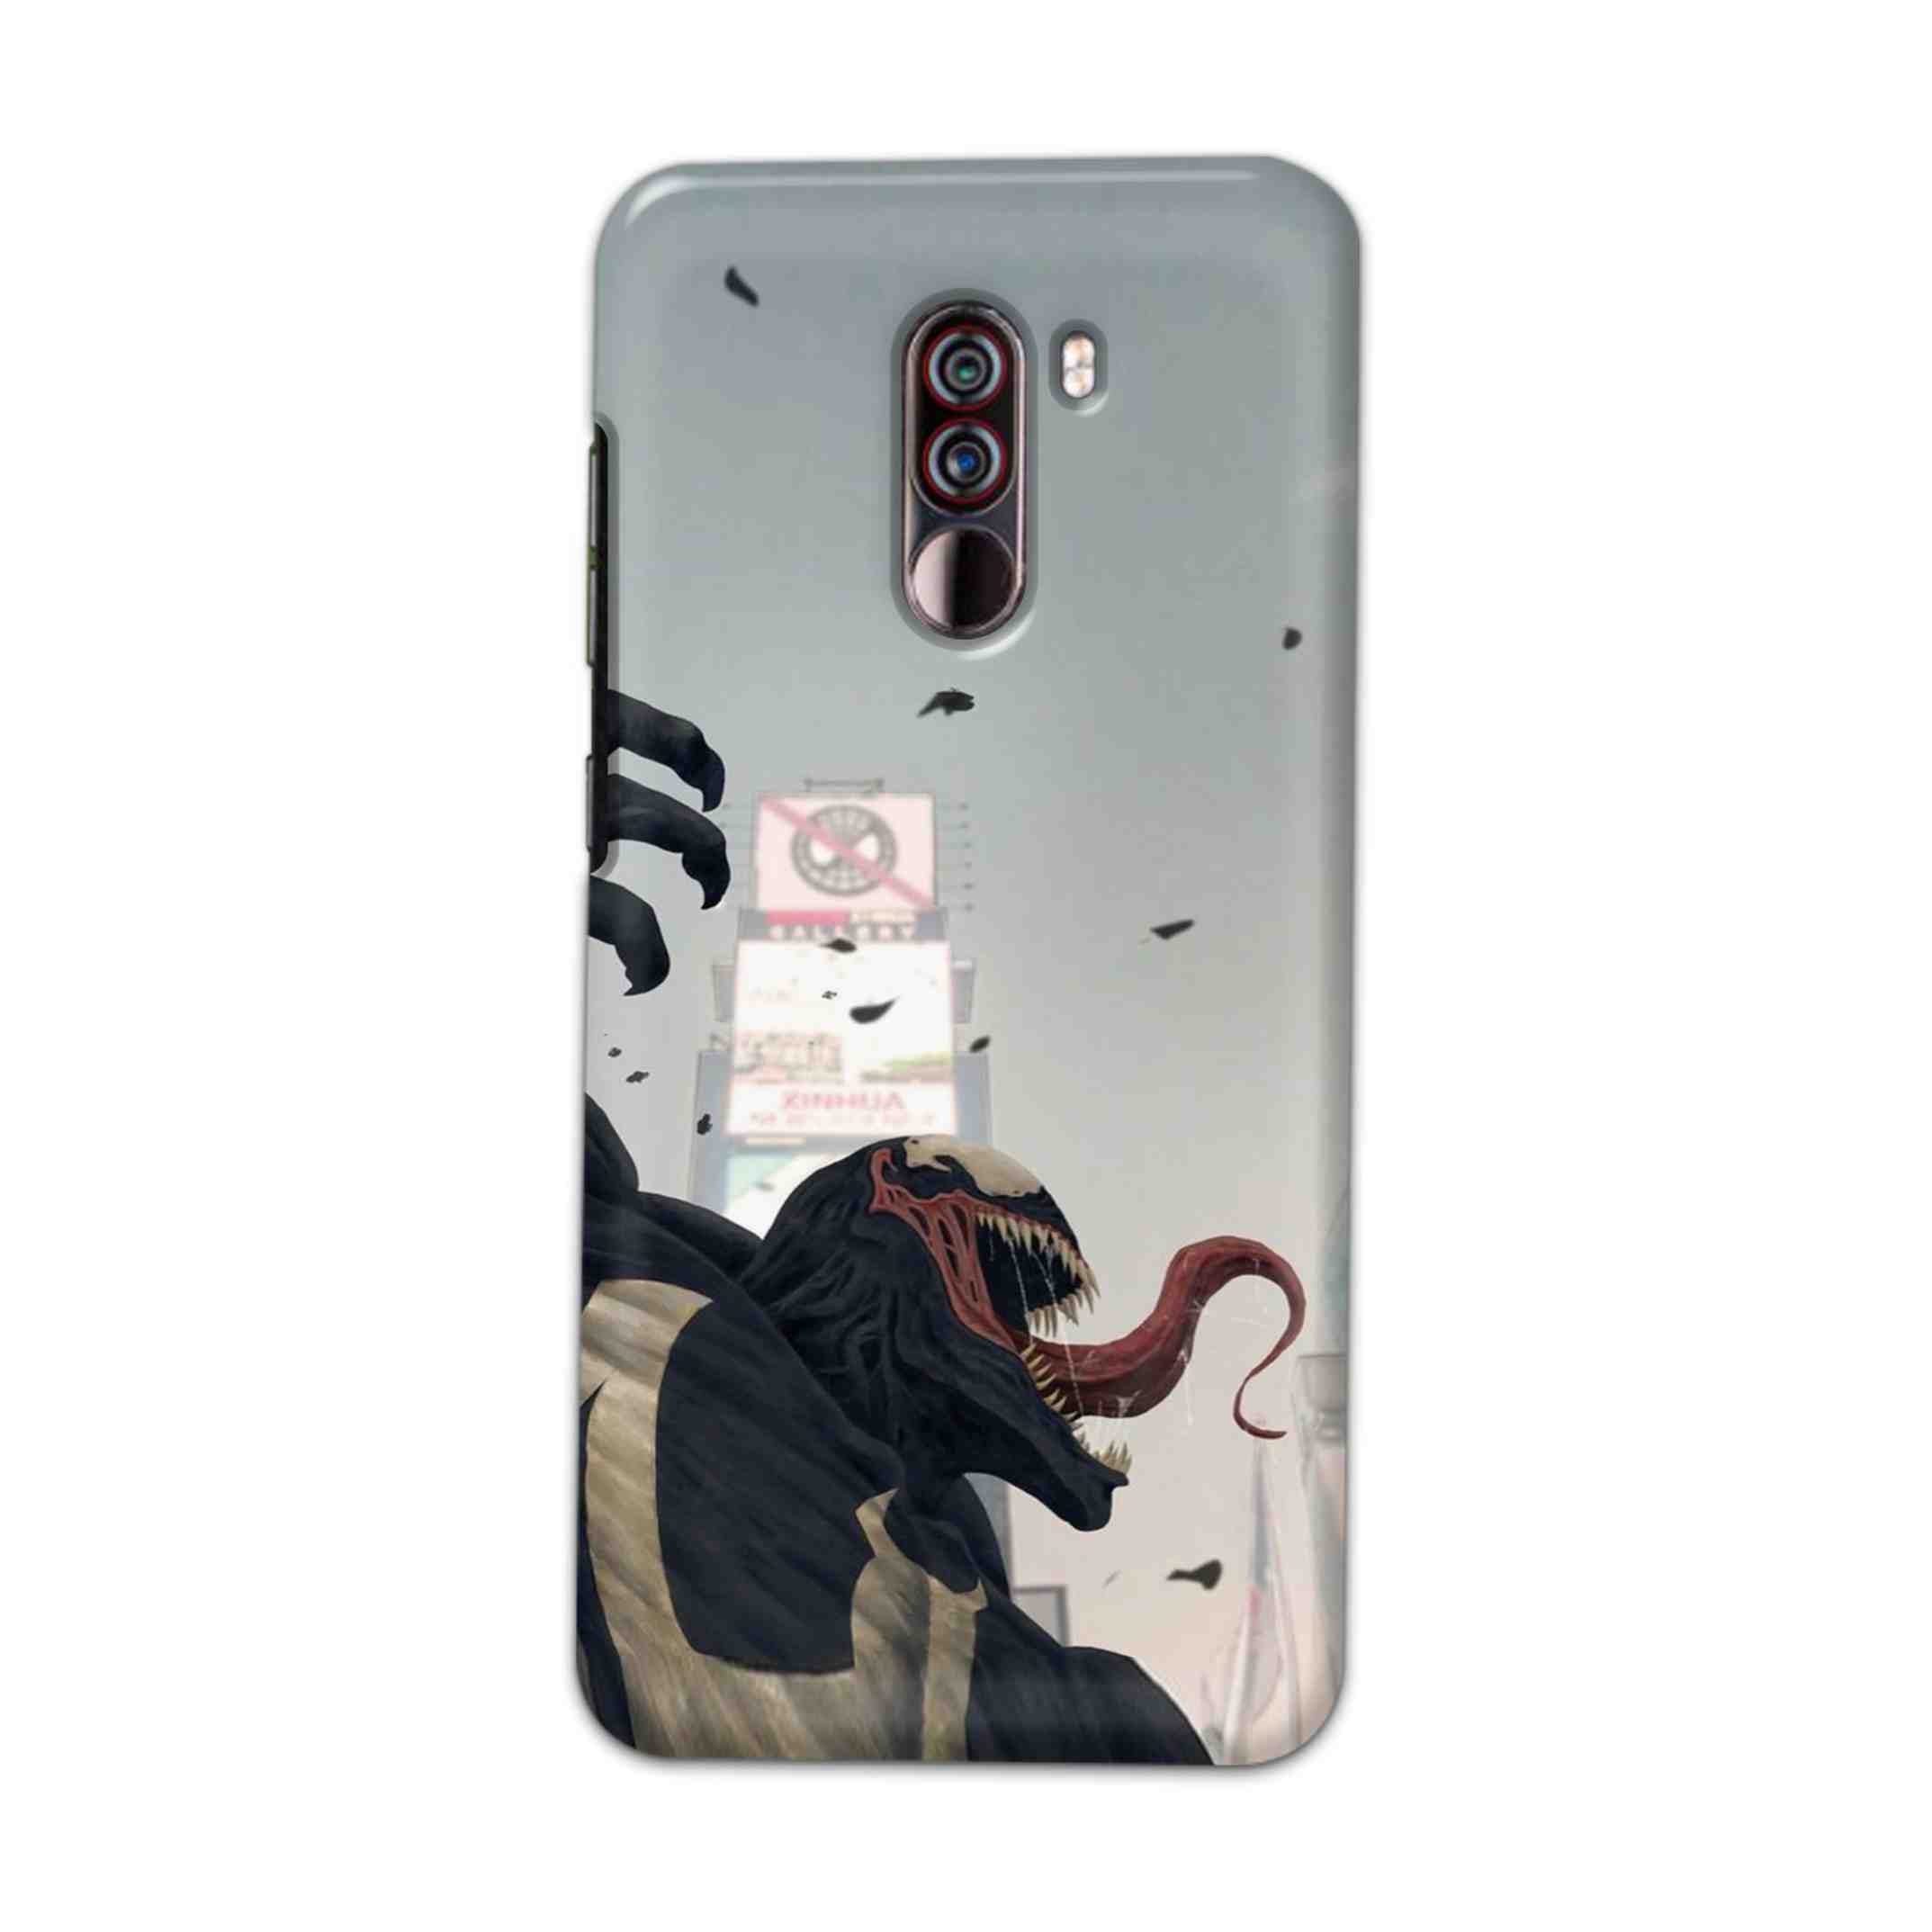 Buy Venom Crunch Hard Back Mobile Phone Case Cover For Xiaomi Pocophone F1 Online